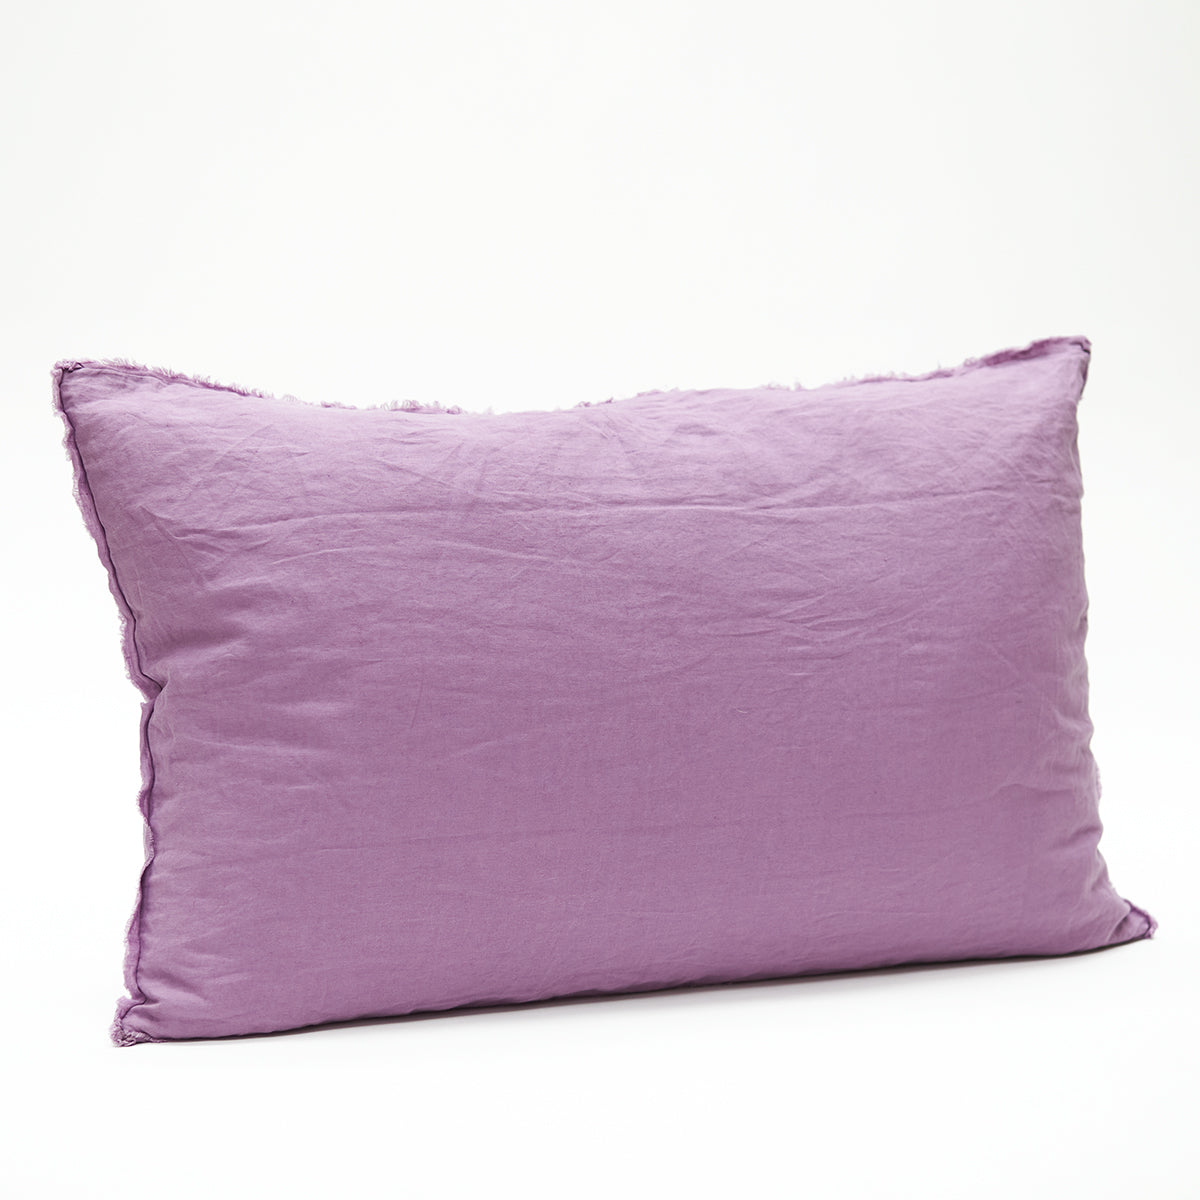 Bedhead Cushion in Jacaranda - Cover Only